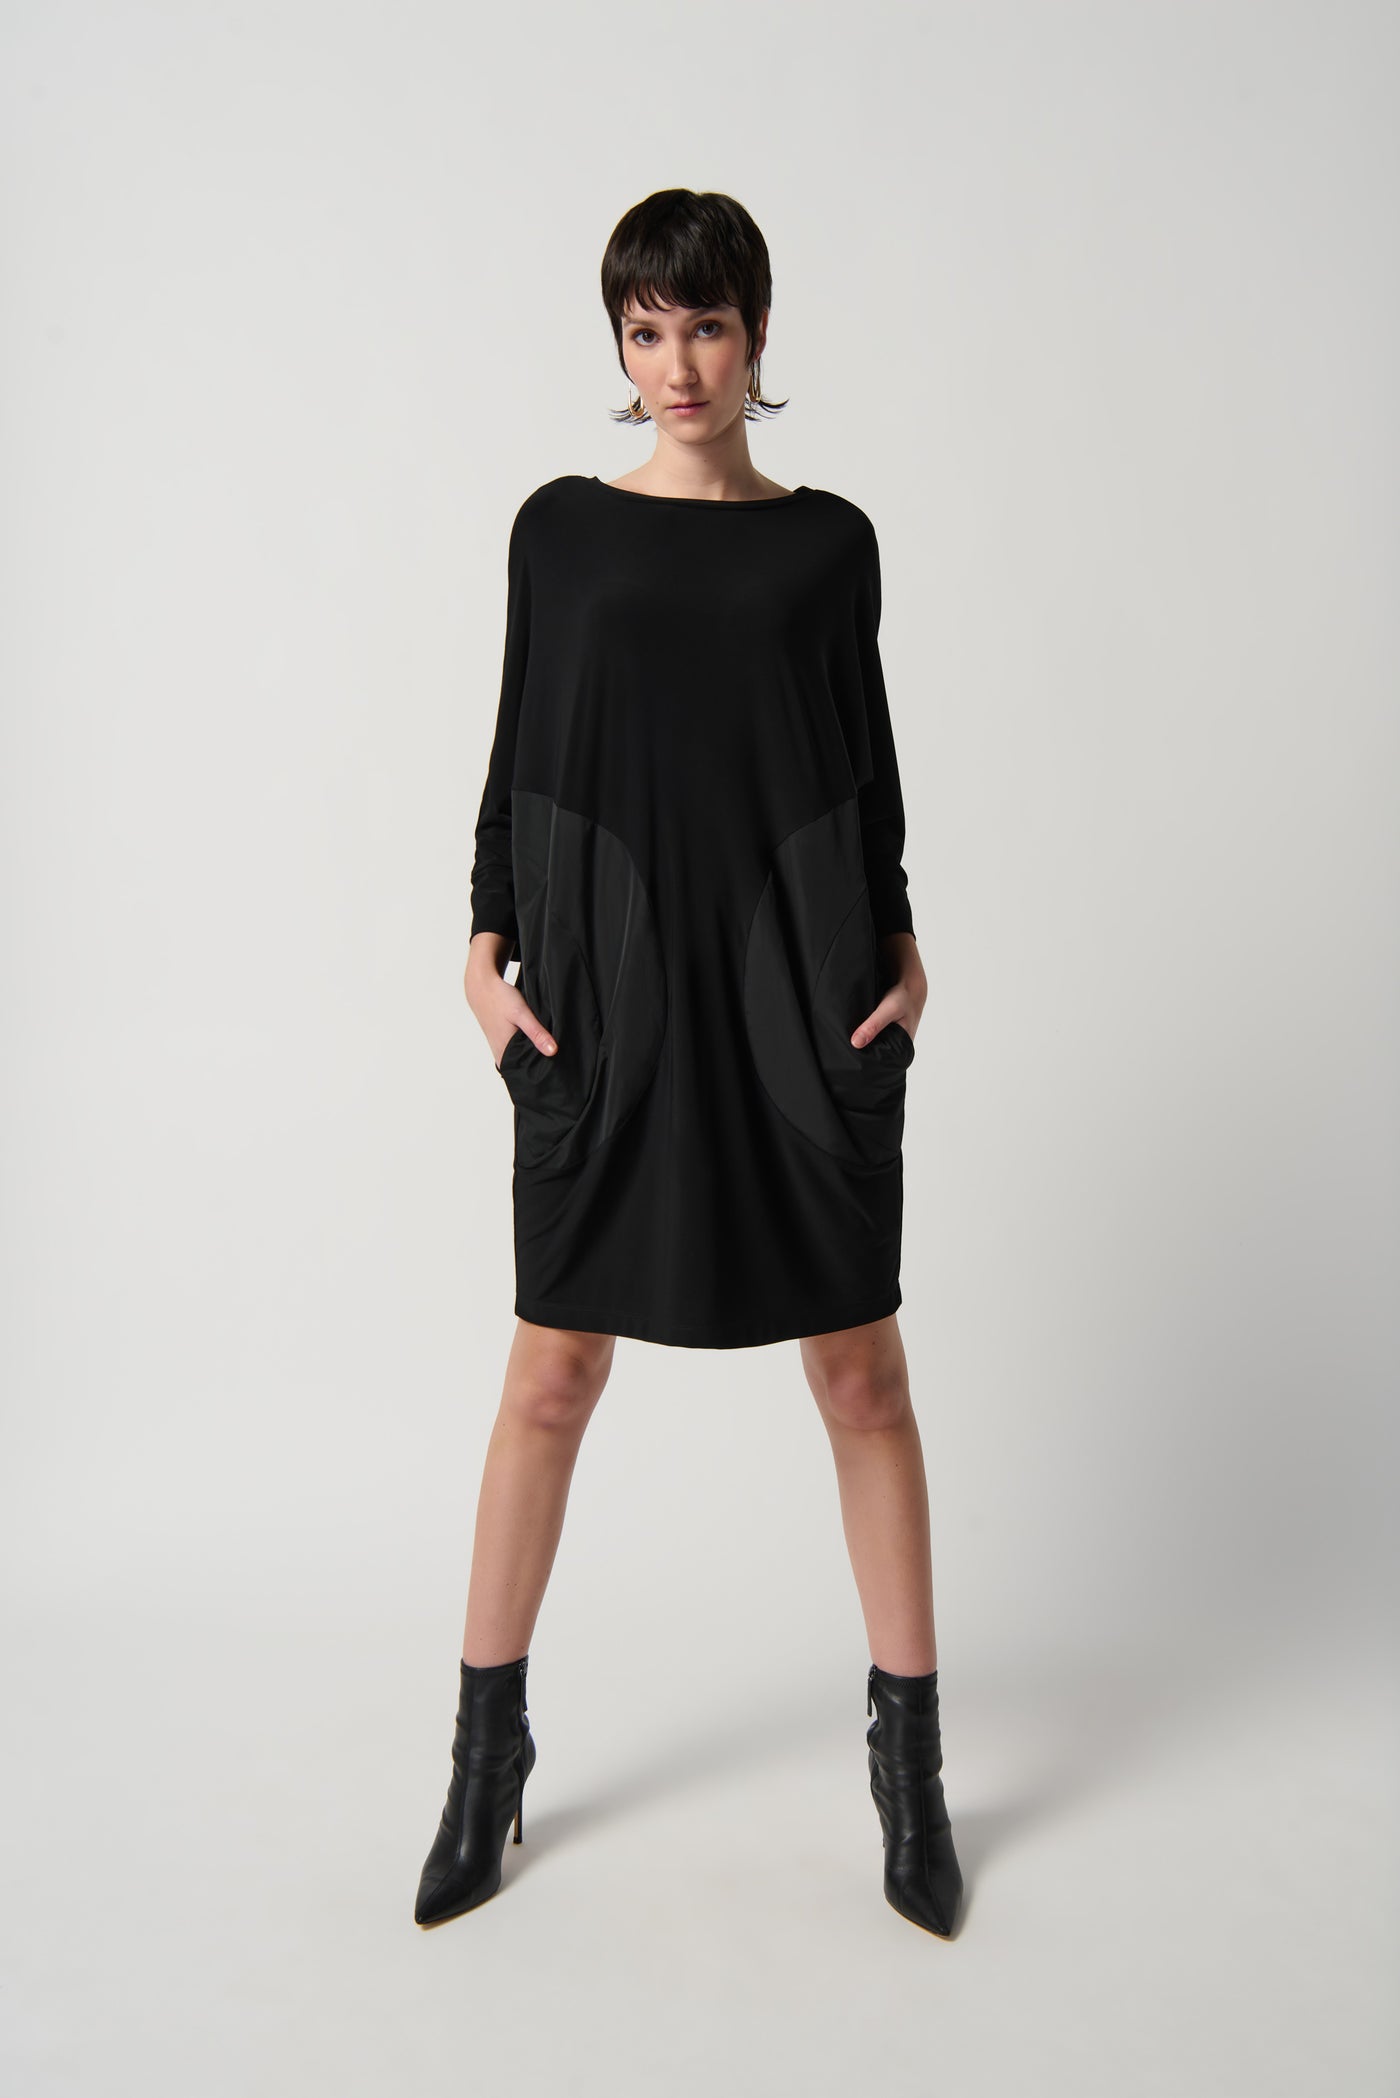 Joseph Ribkoff Black Dress With Side Panel and Pockets